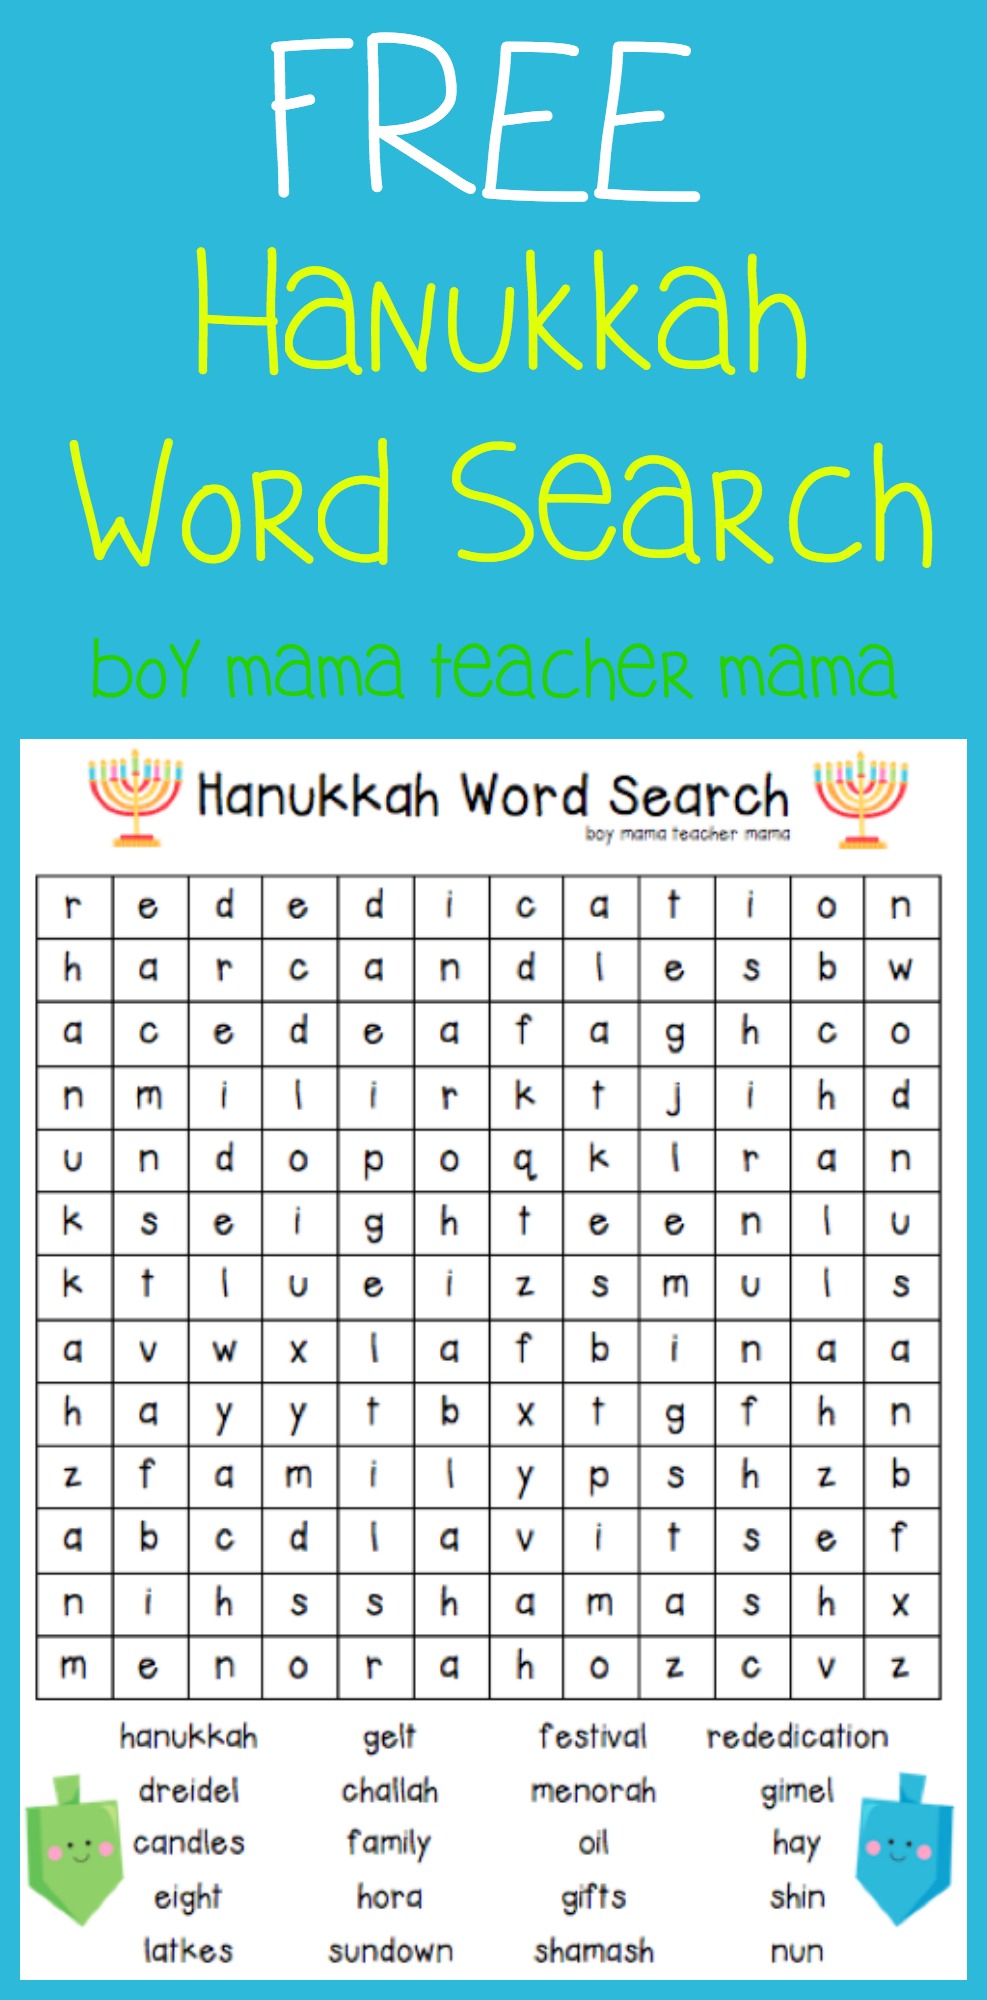 free-hanukkah-word-search-boy-mama-teacher-mama